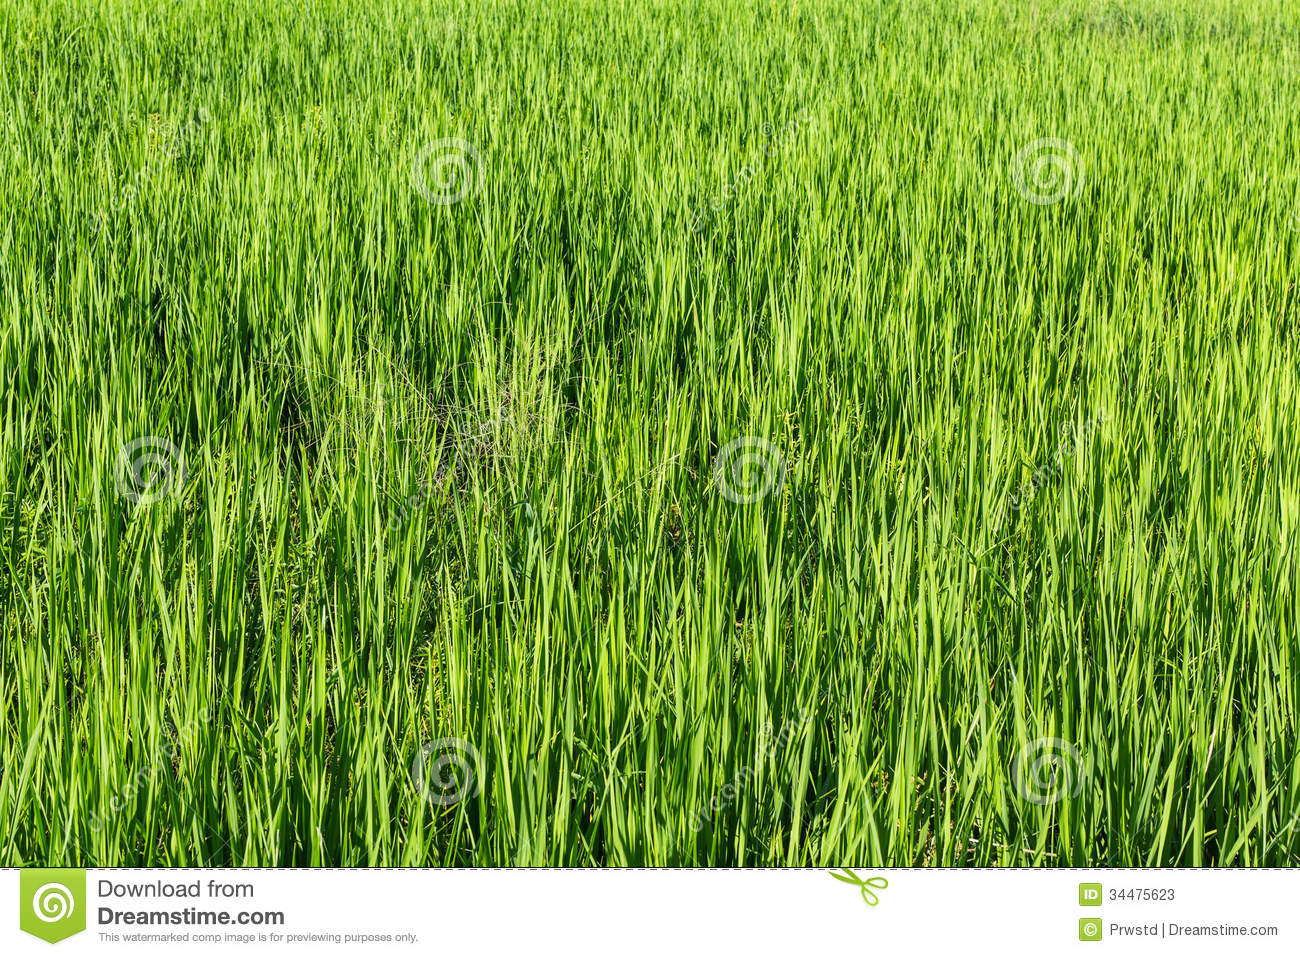 Rice Field Stock Photos   Image  34475623